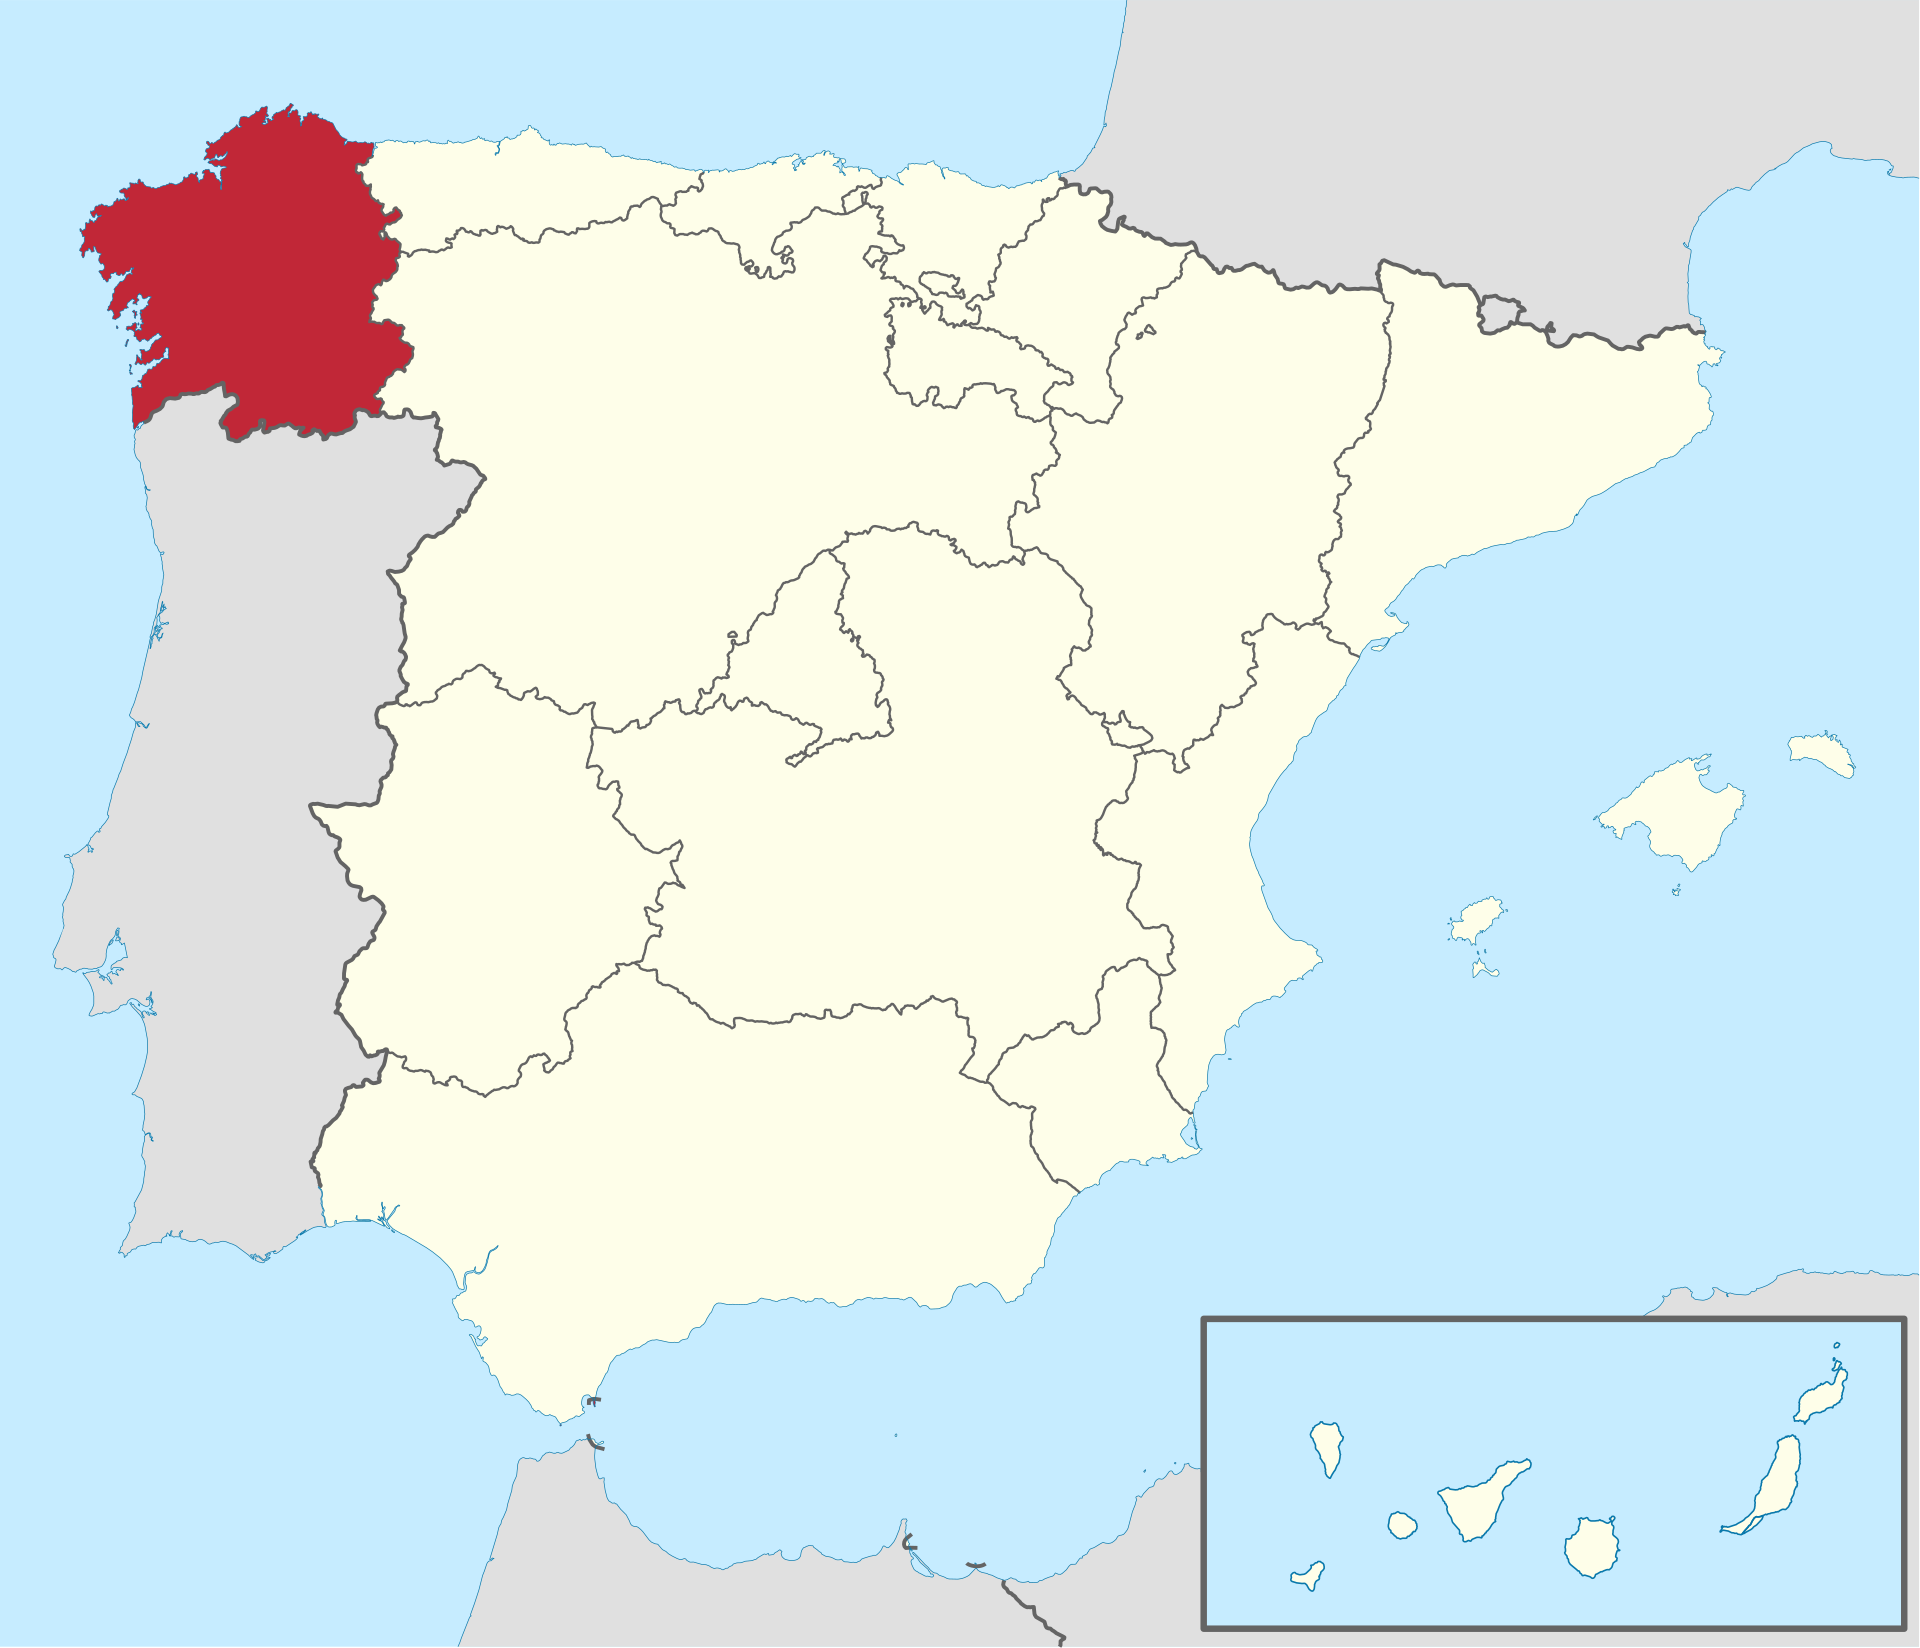 Ceramic Plant Urbex location or around the region Galicia (Pontevedra), Spain